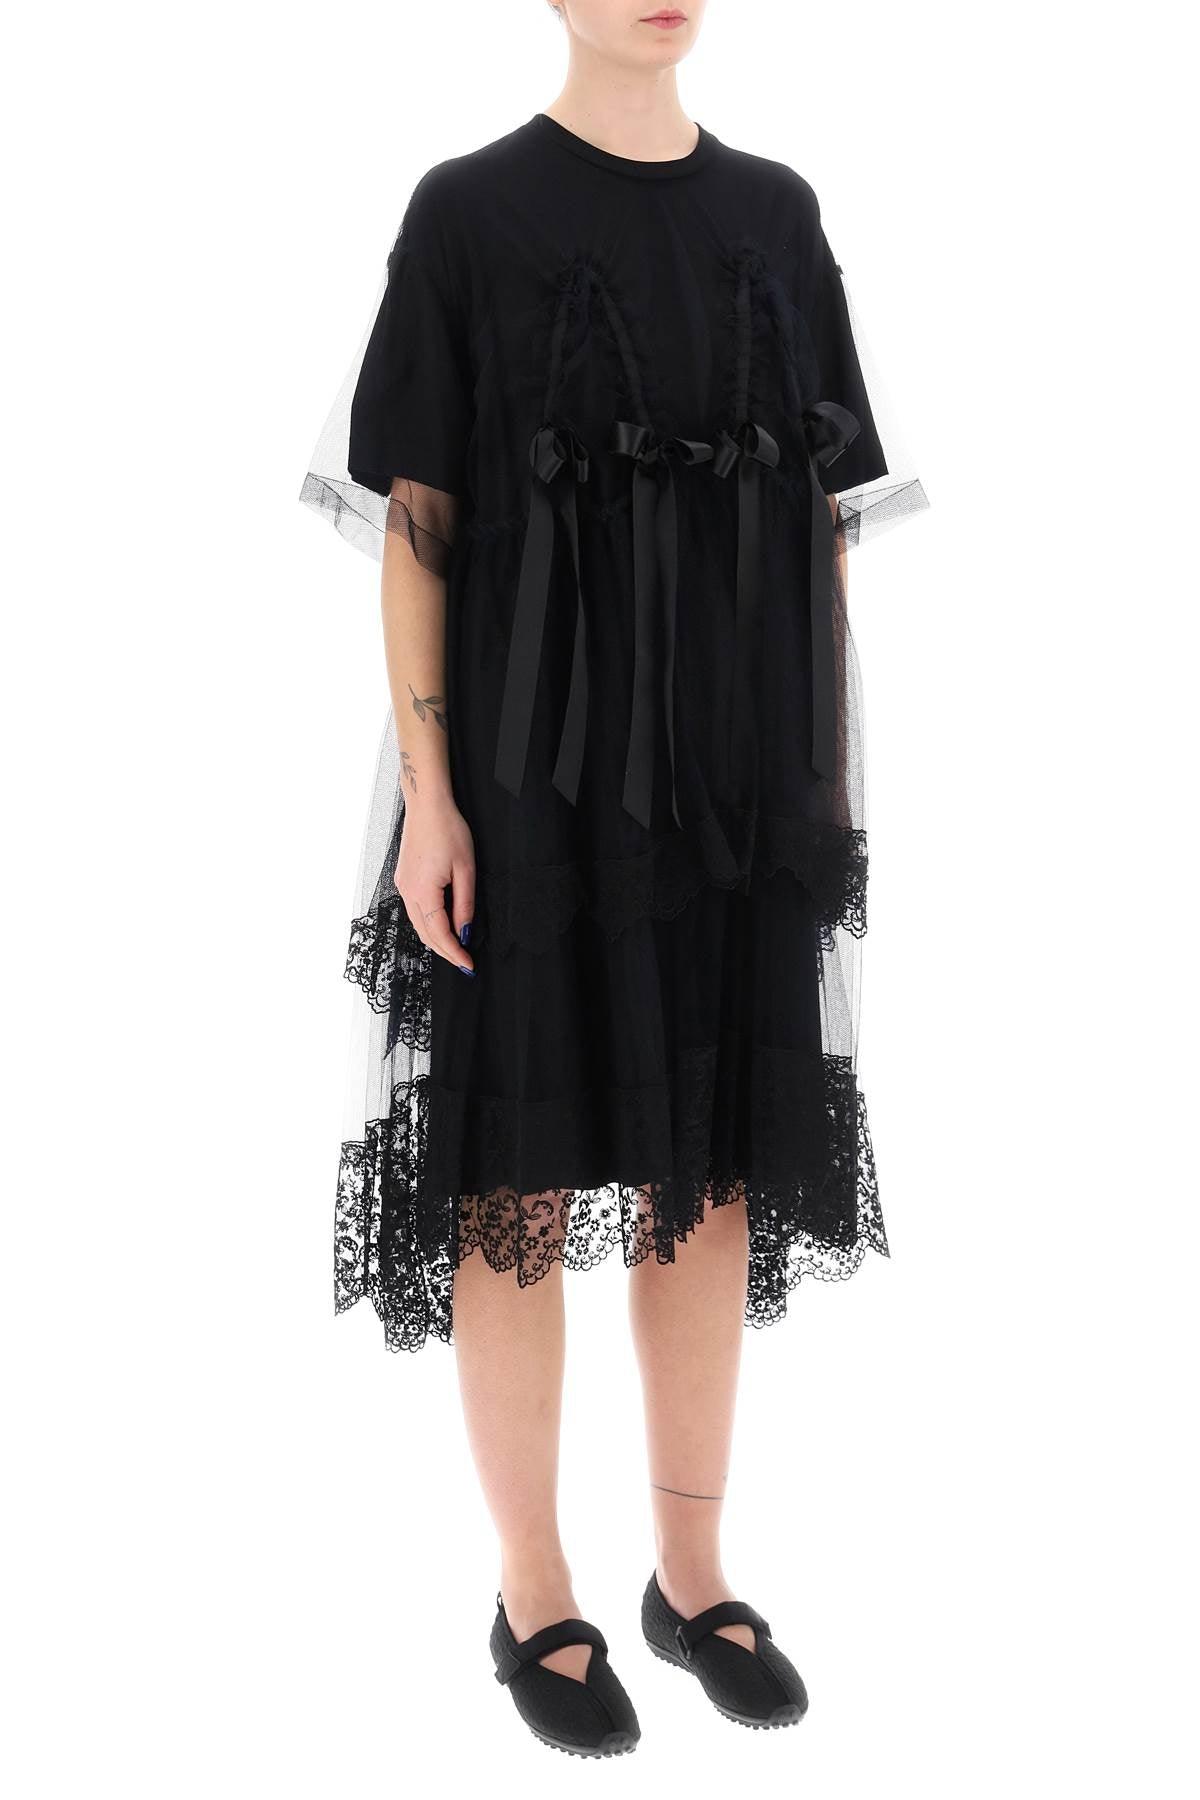 Simone Rocha Midi Dress In Mesh With Lace And Bows - JOHN JULIA